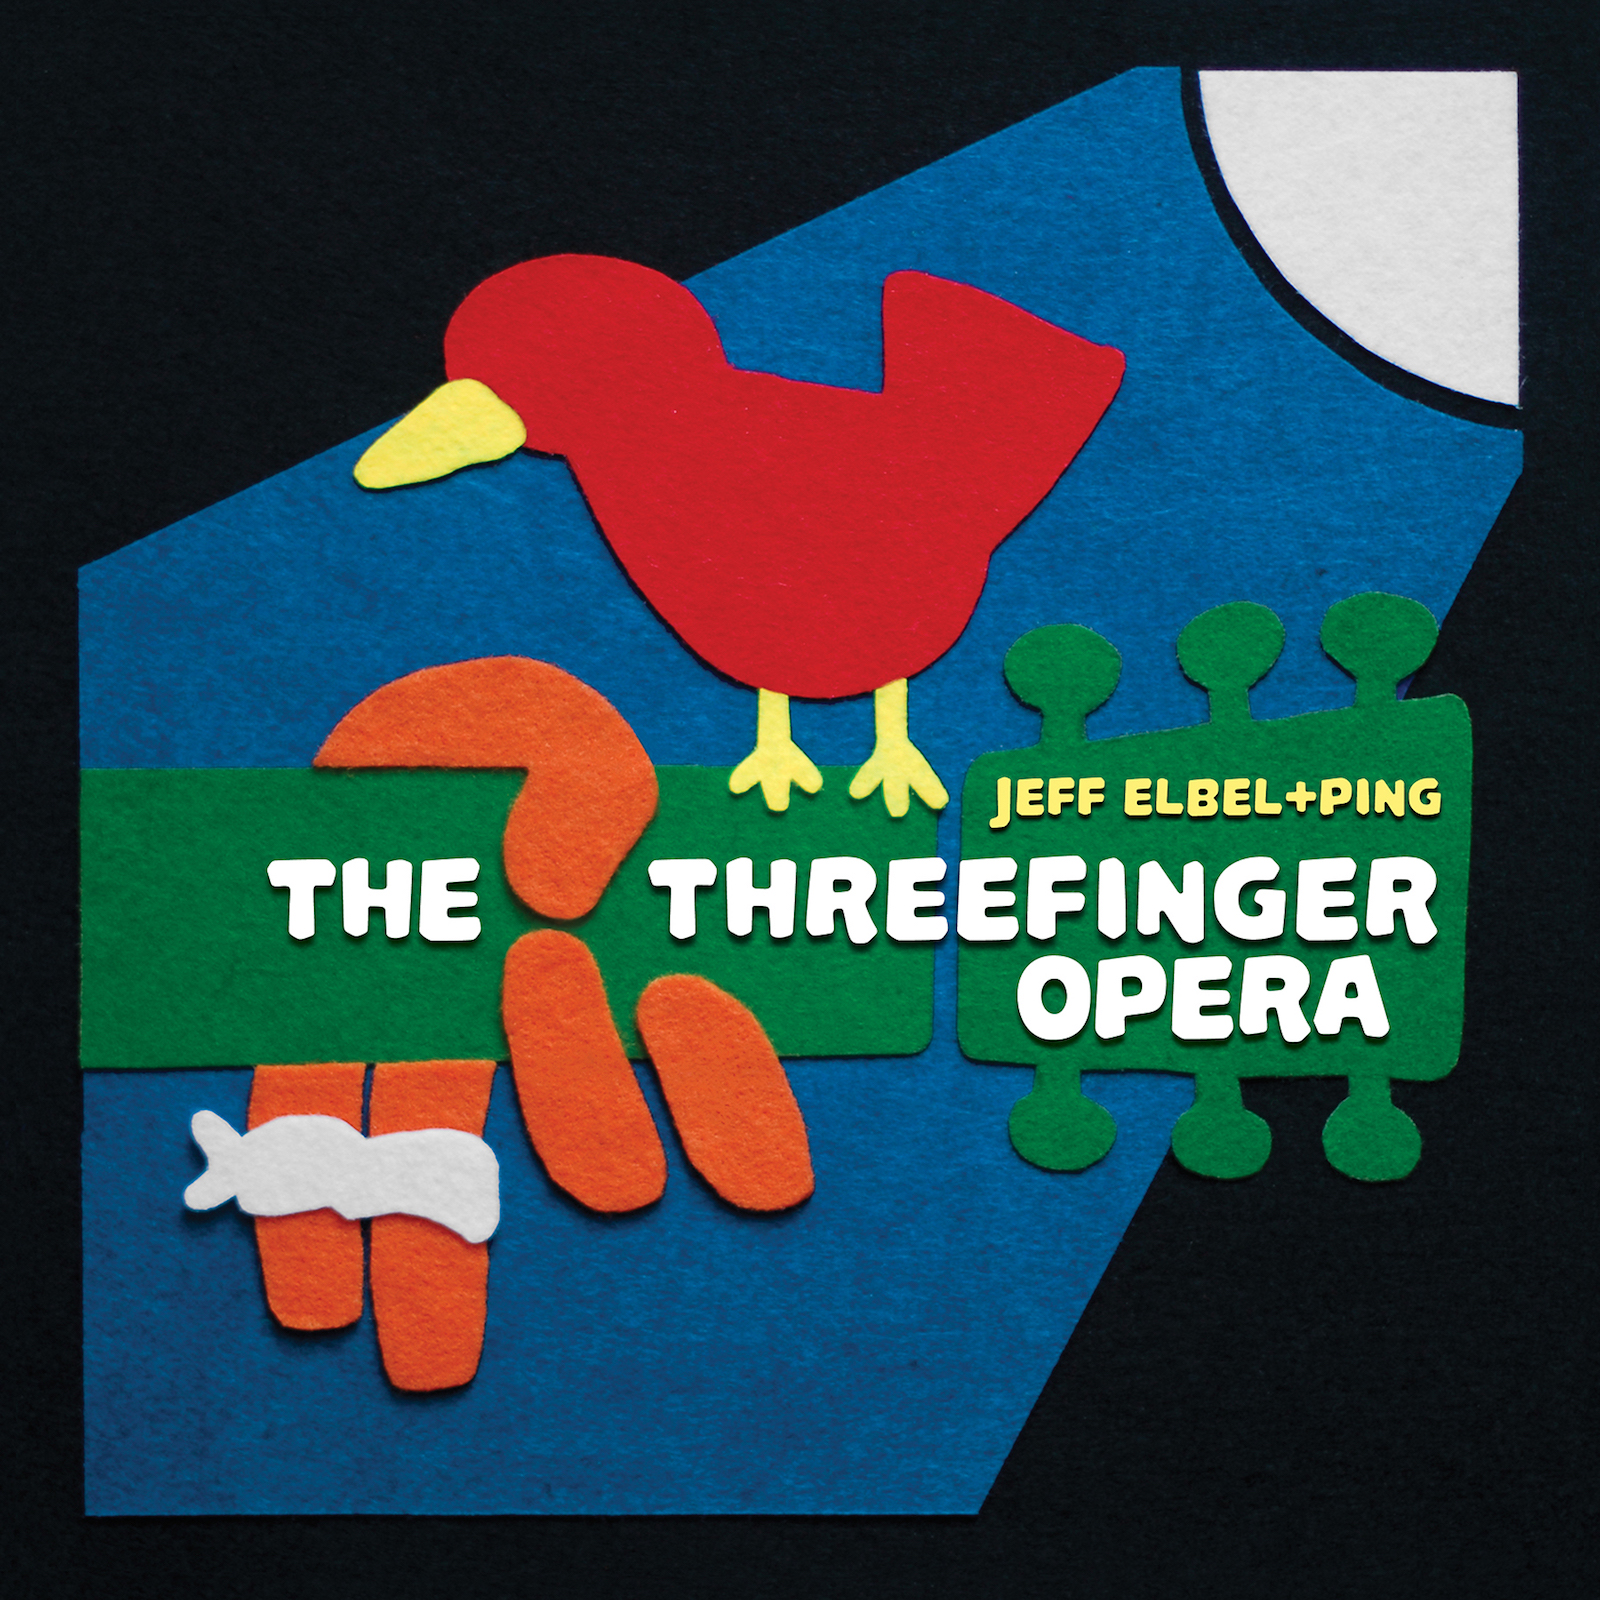 Jeff Elbel + Ping "The Threefinger Opera" cover